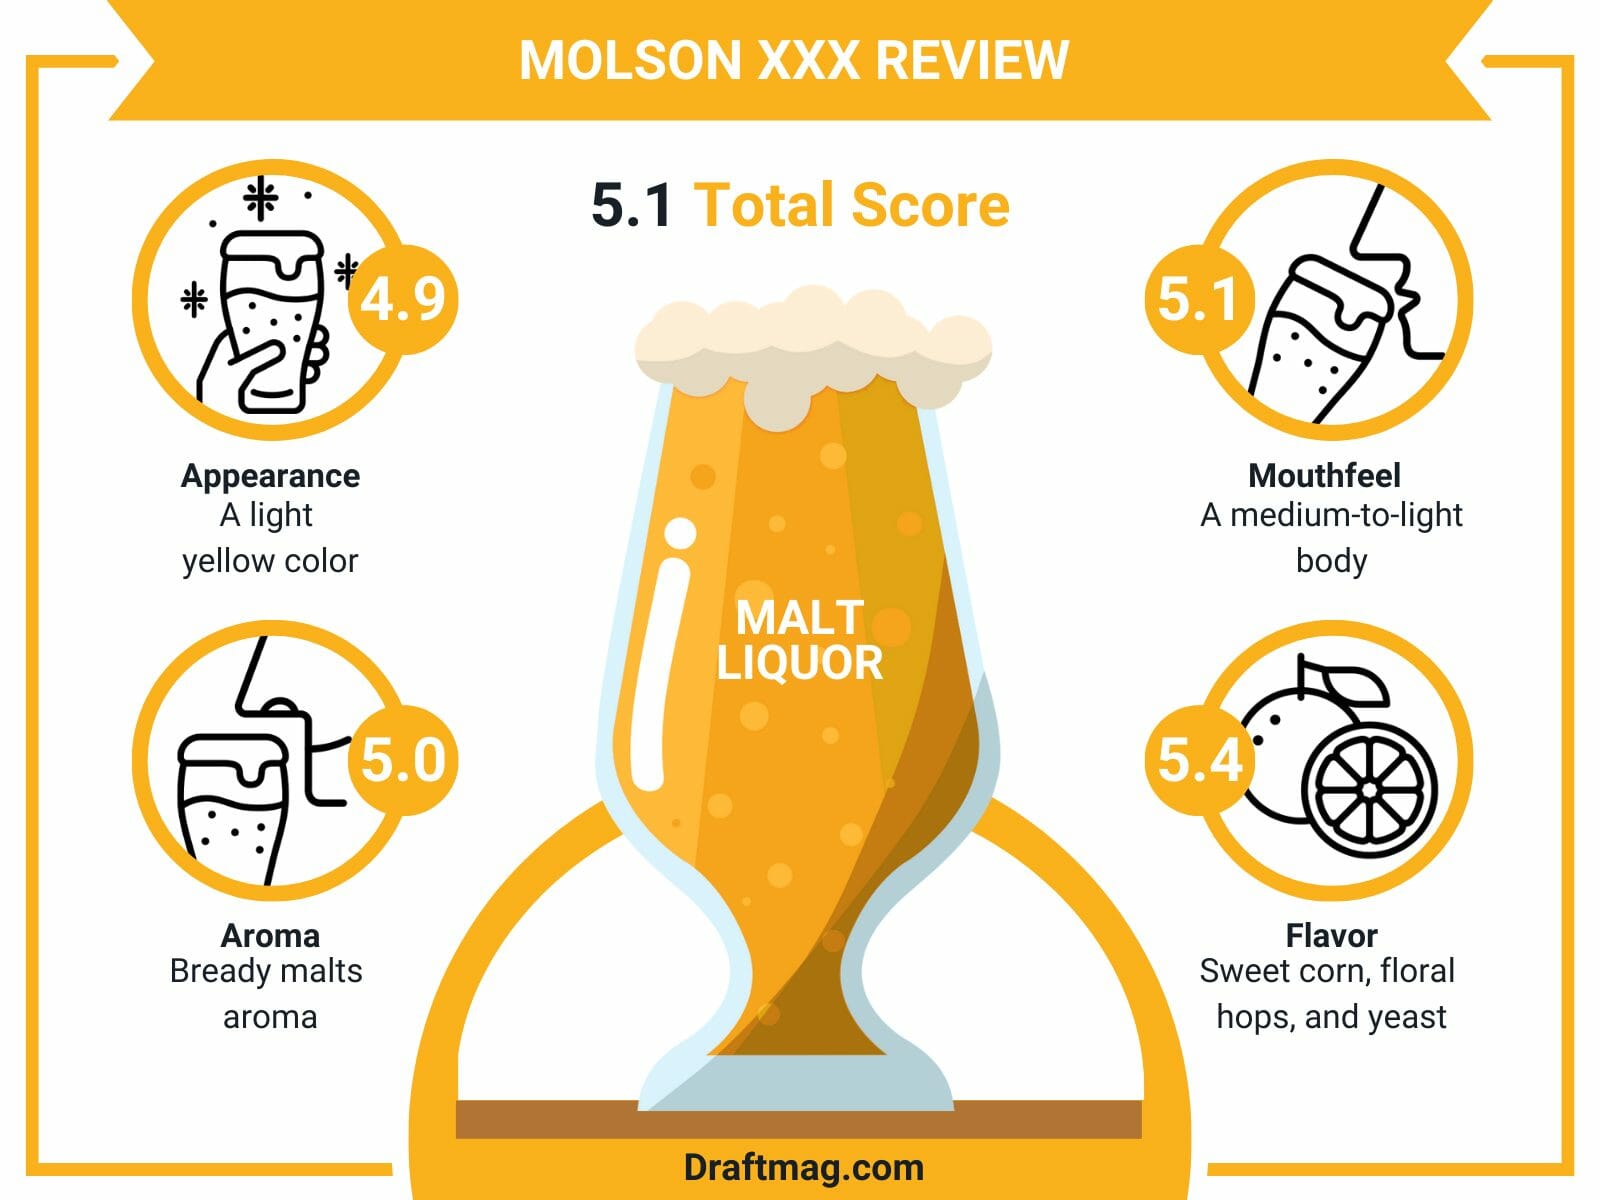 Molson xxx review infographic